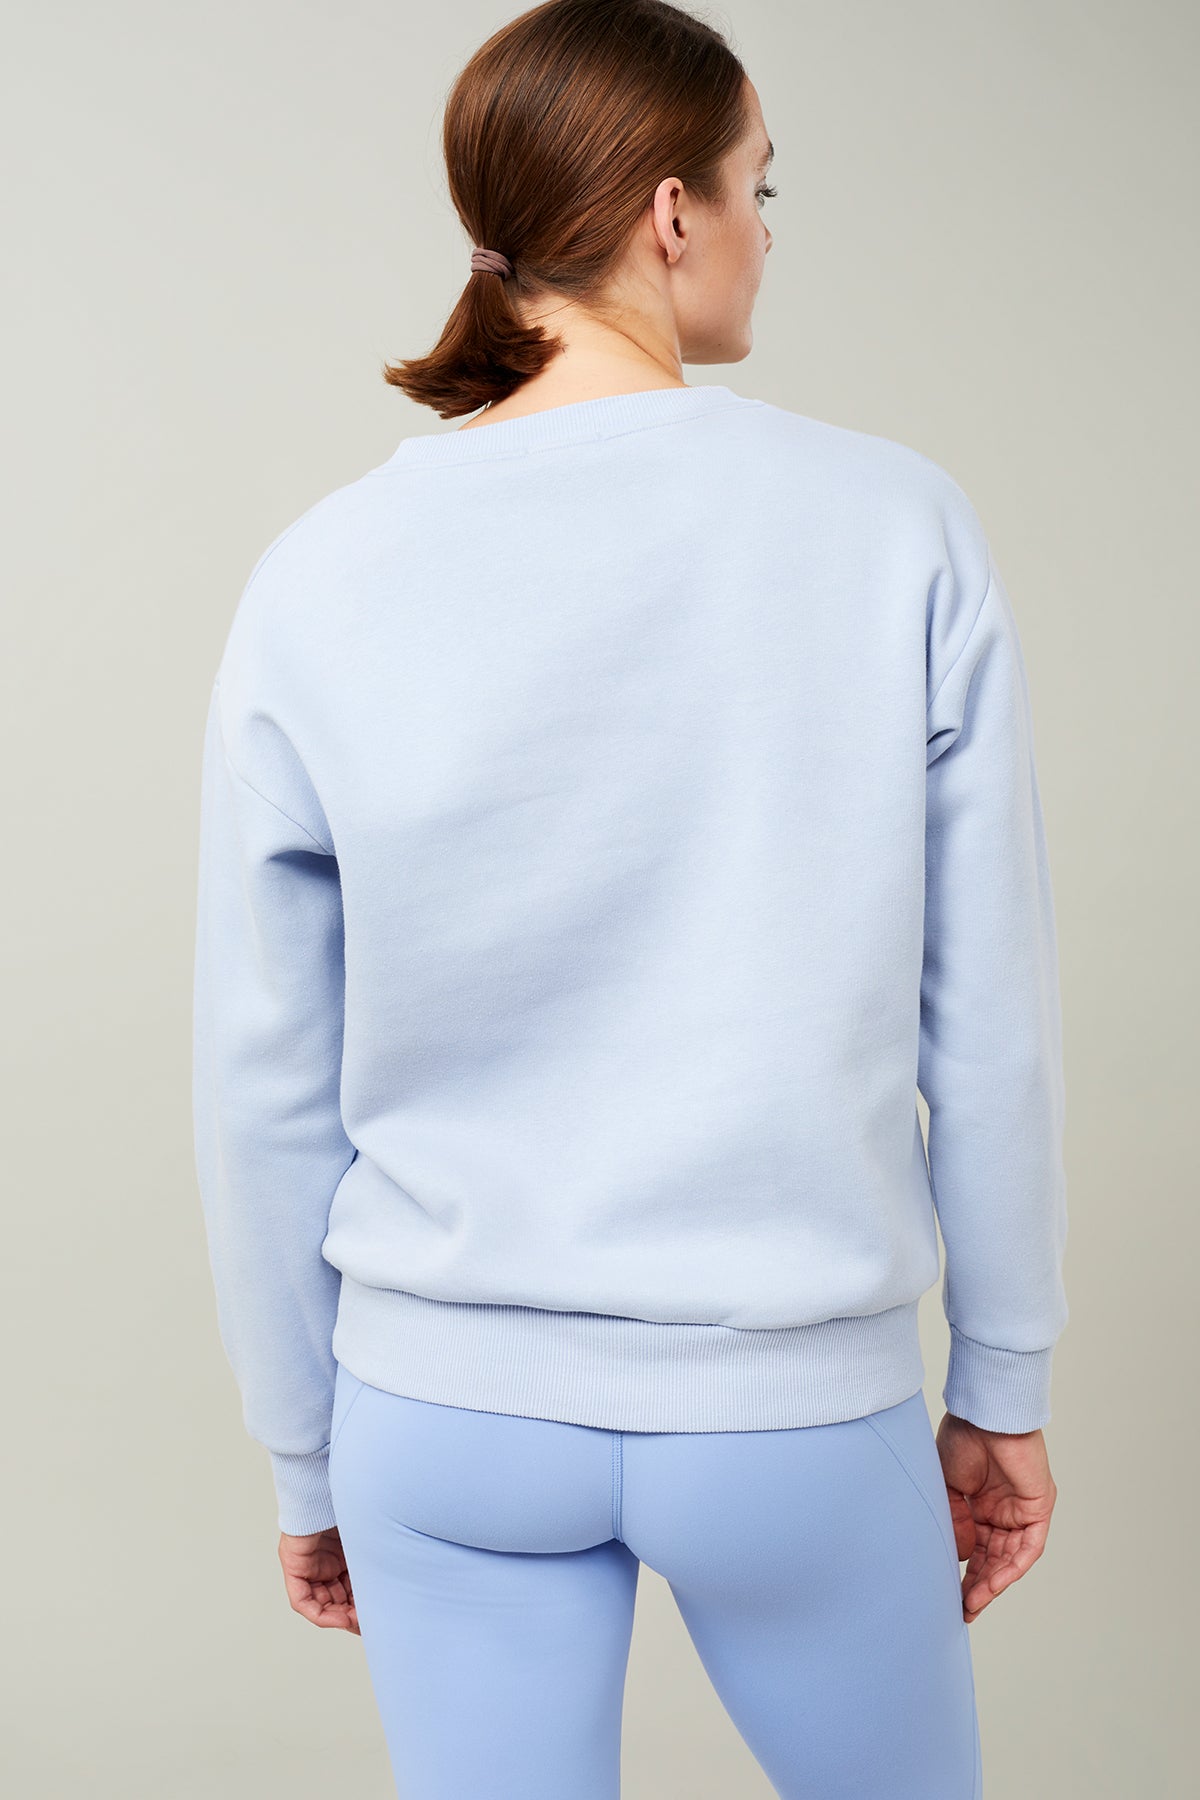 Mandala Yoga Pullover Blau Rückseite - Practice Happiness Sweater